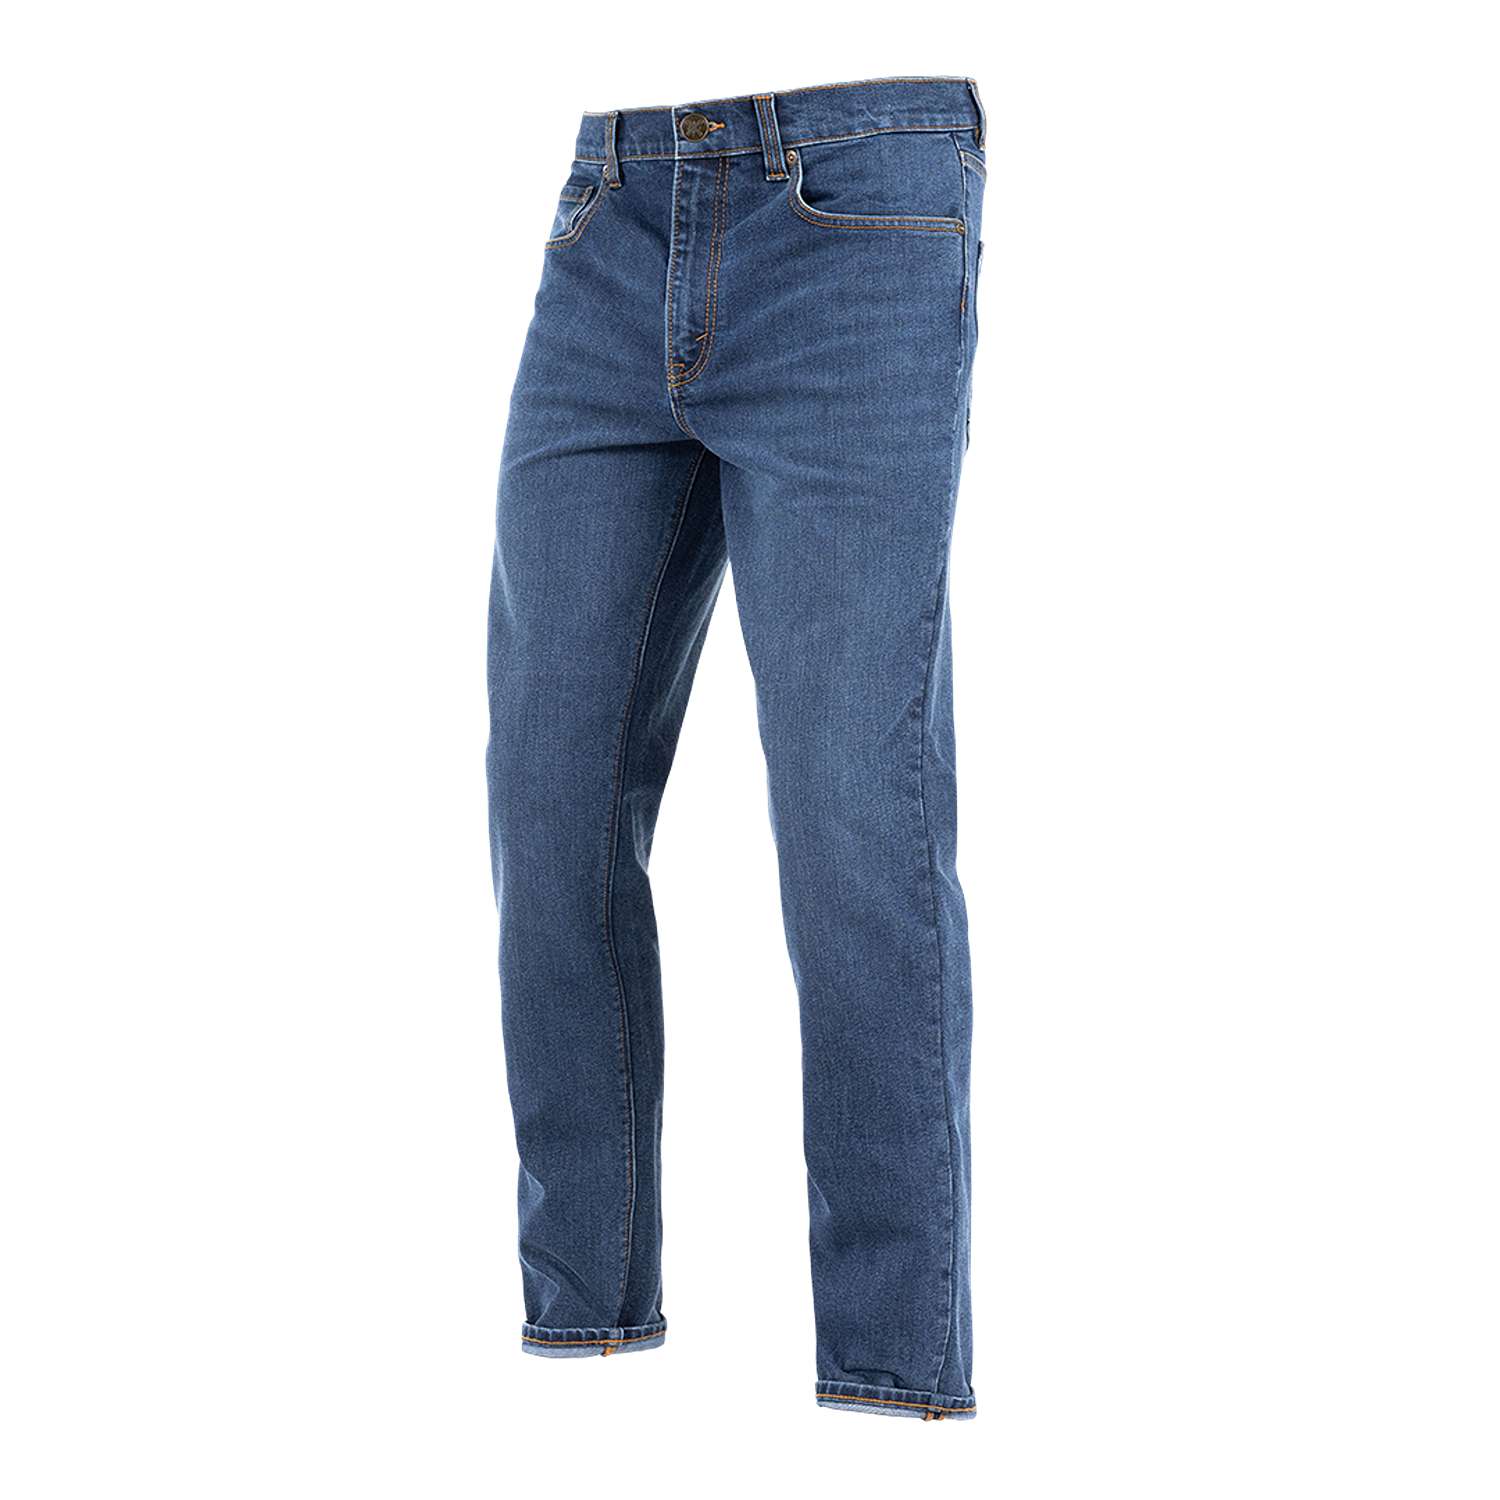 Image of John Doe Classic Tapered Jeans Indigo Size W36/L34 ID 4250553247056